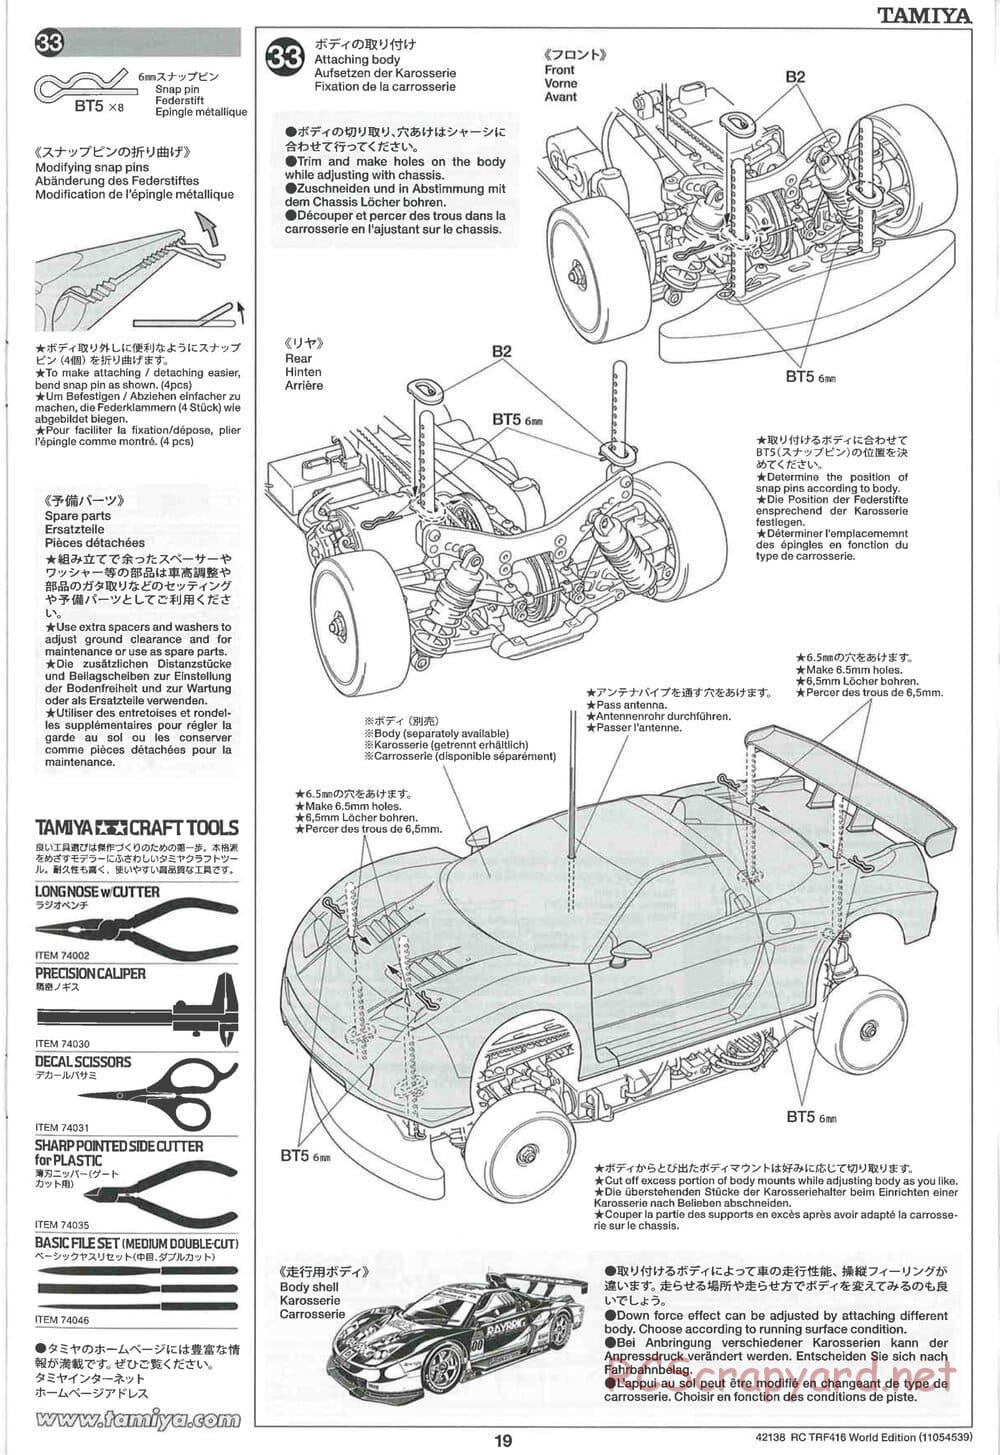 Tamiya - TRF416 World Edition Chassis - Manual - Page 19